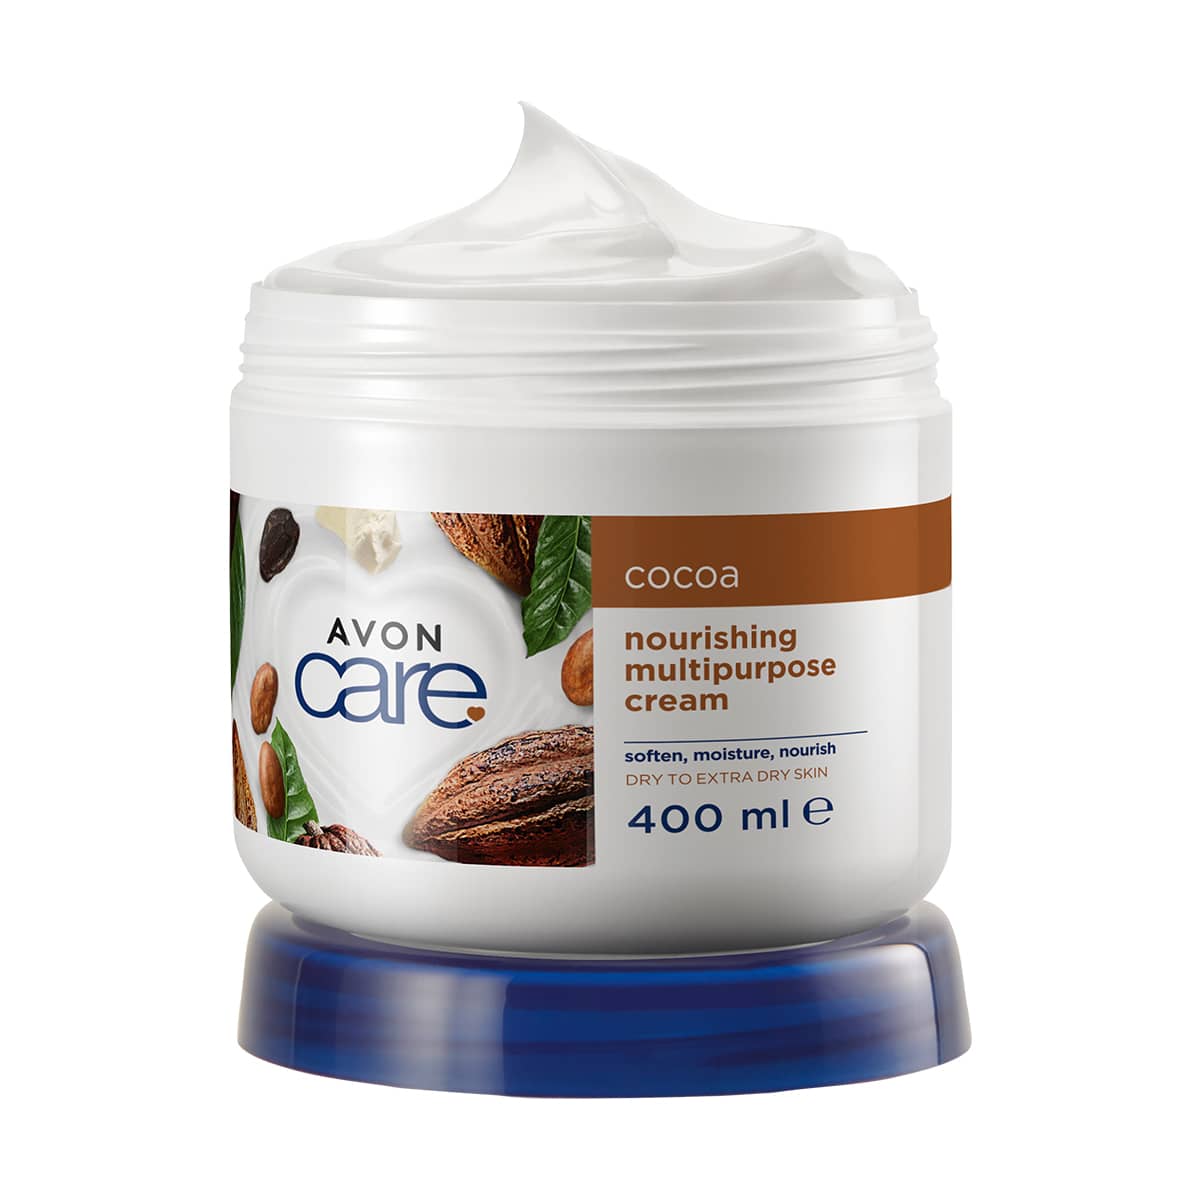 Avon Care Cocoa Multipurpose Cream 400ml